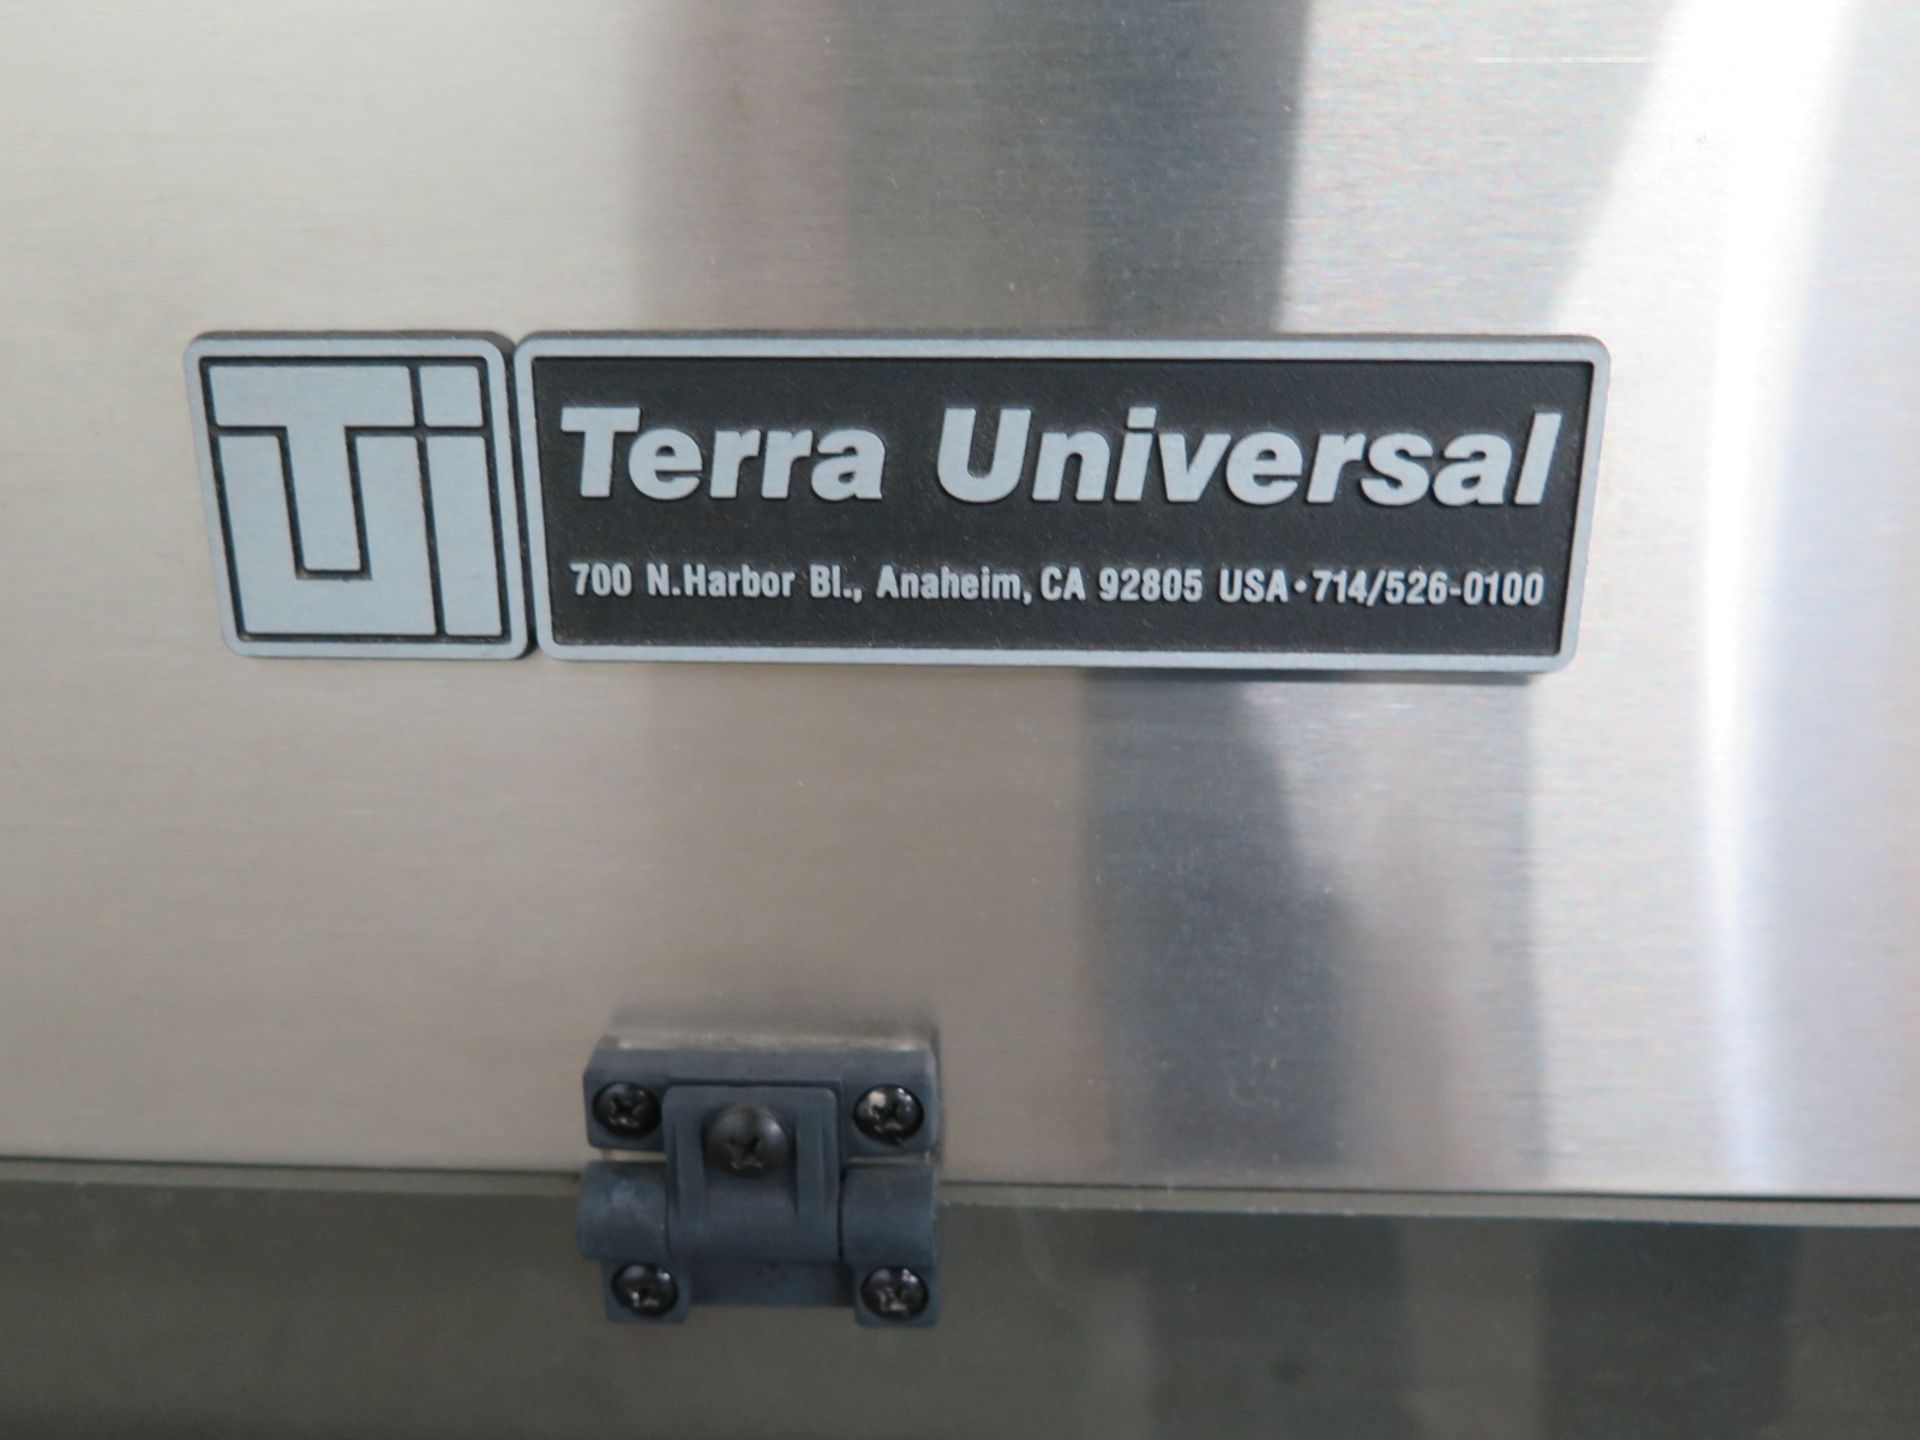 Terra Universal Bench Model Fume Hood 37 ½”W x 24”D x 23”H - Image 2 of 2